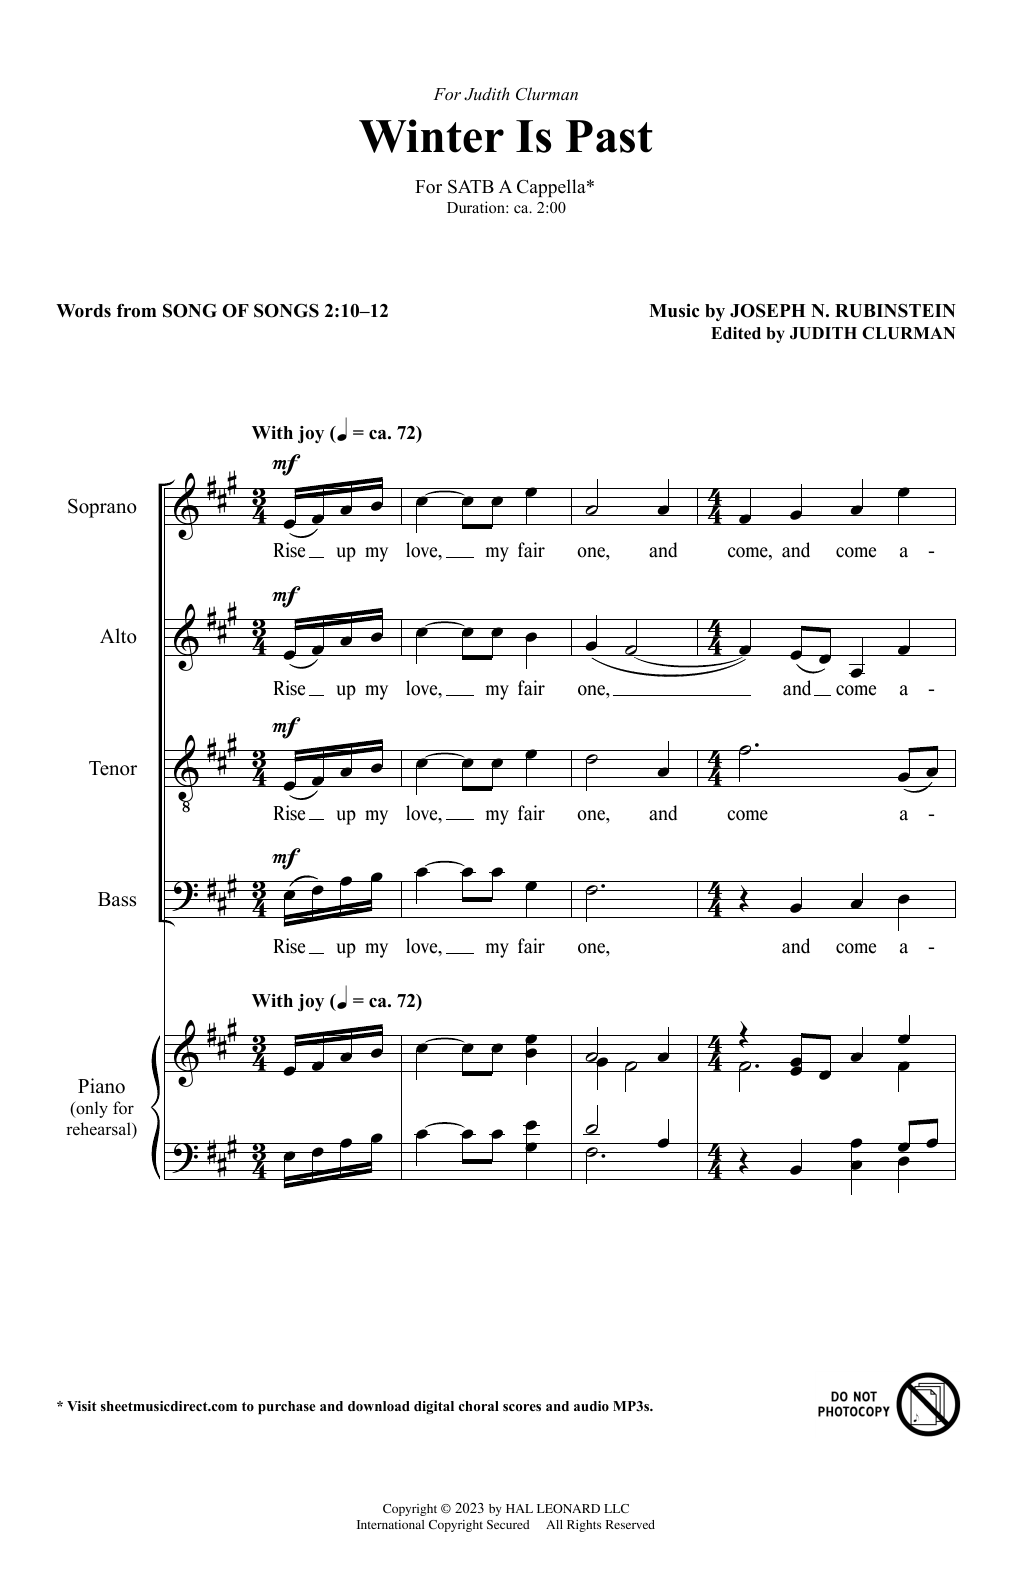 Download Joseph N. Rubinstein Winter Is Past Sheet Music